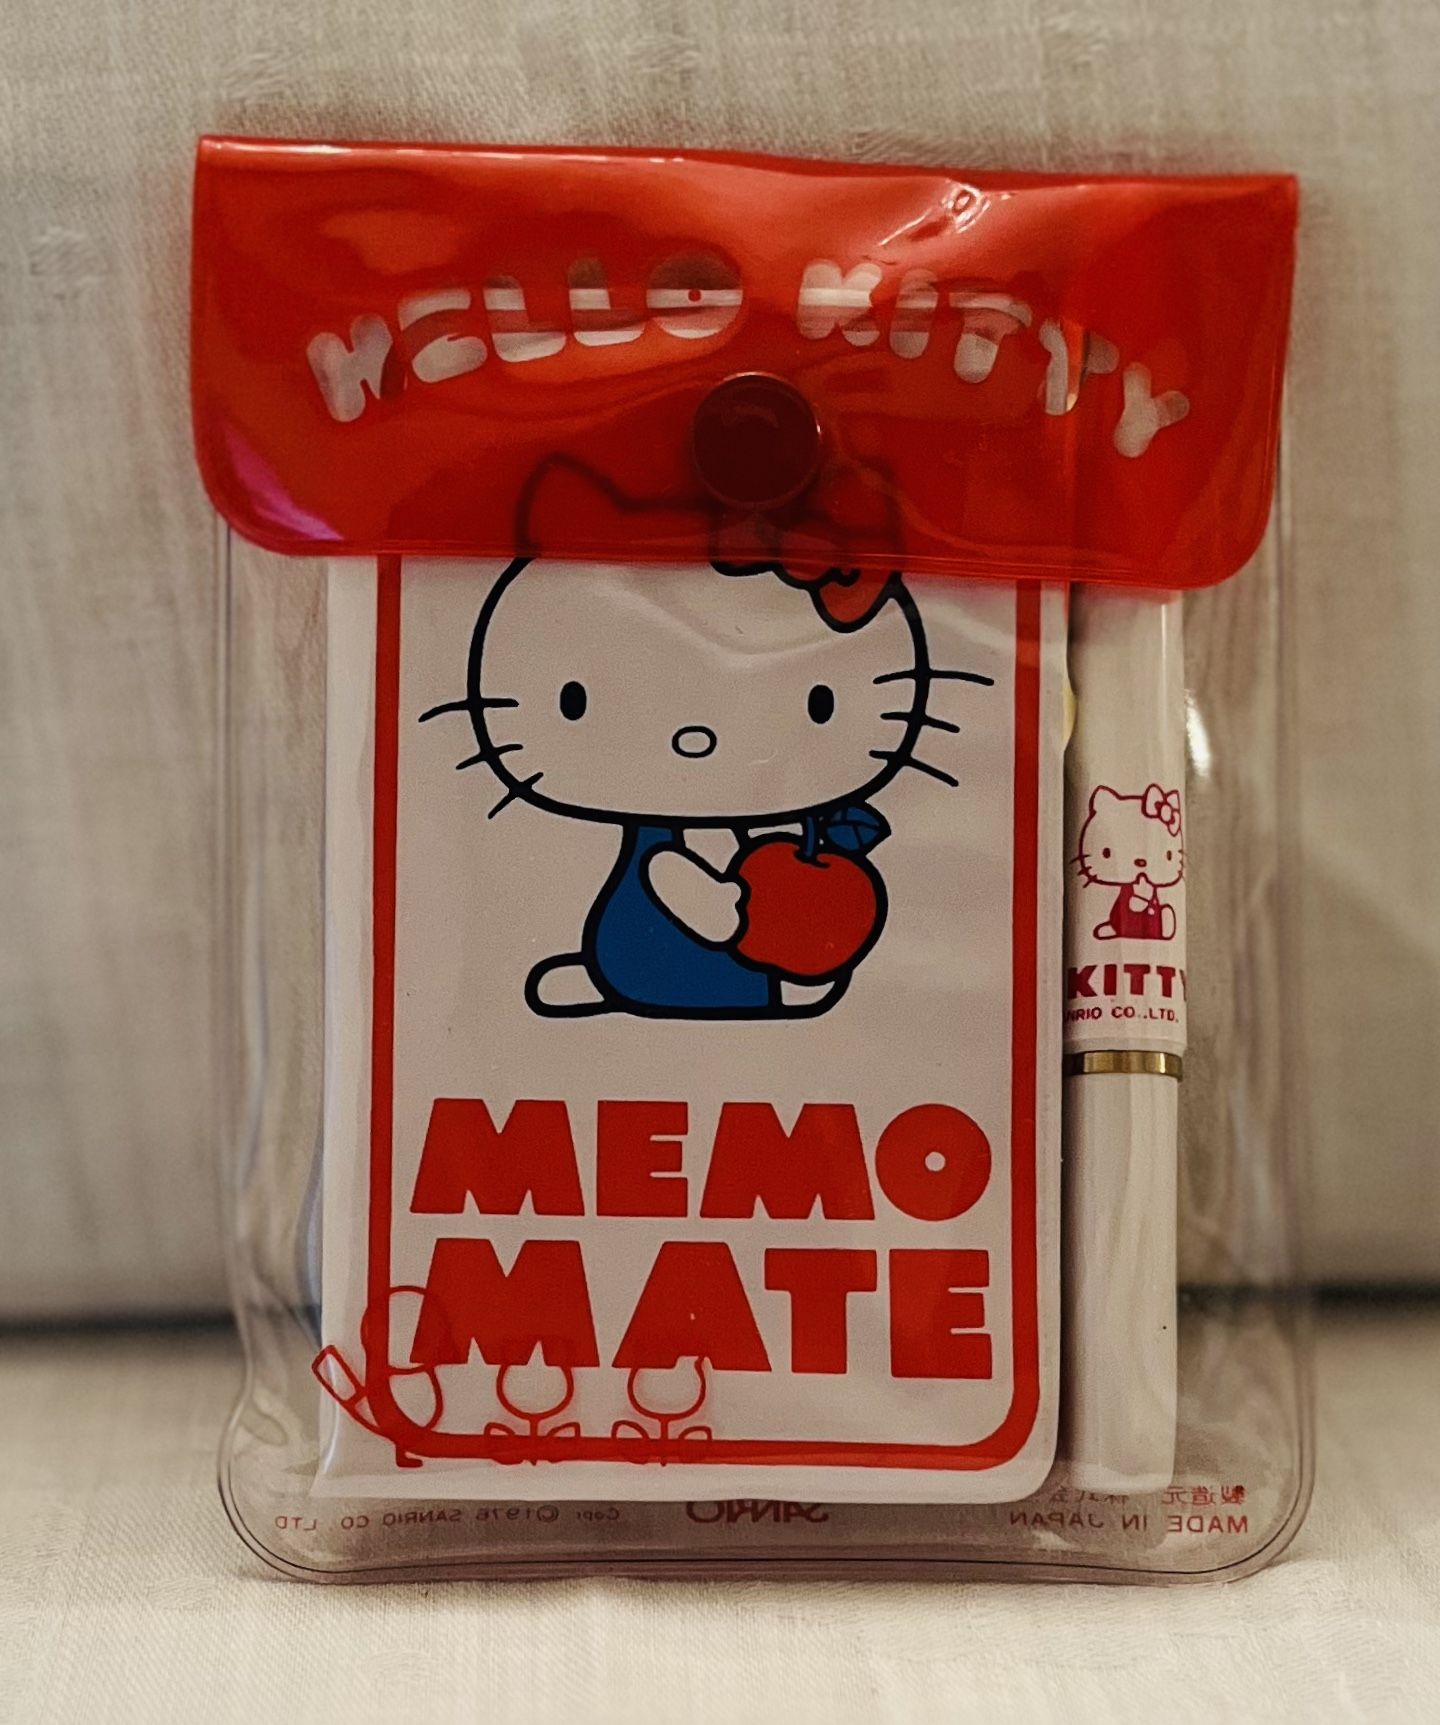 Vintage 1976 Hello Kitty Memo Mate Set - New - Japan